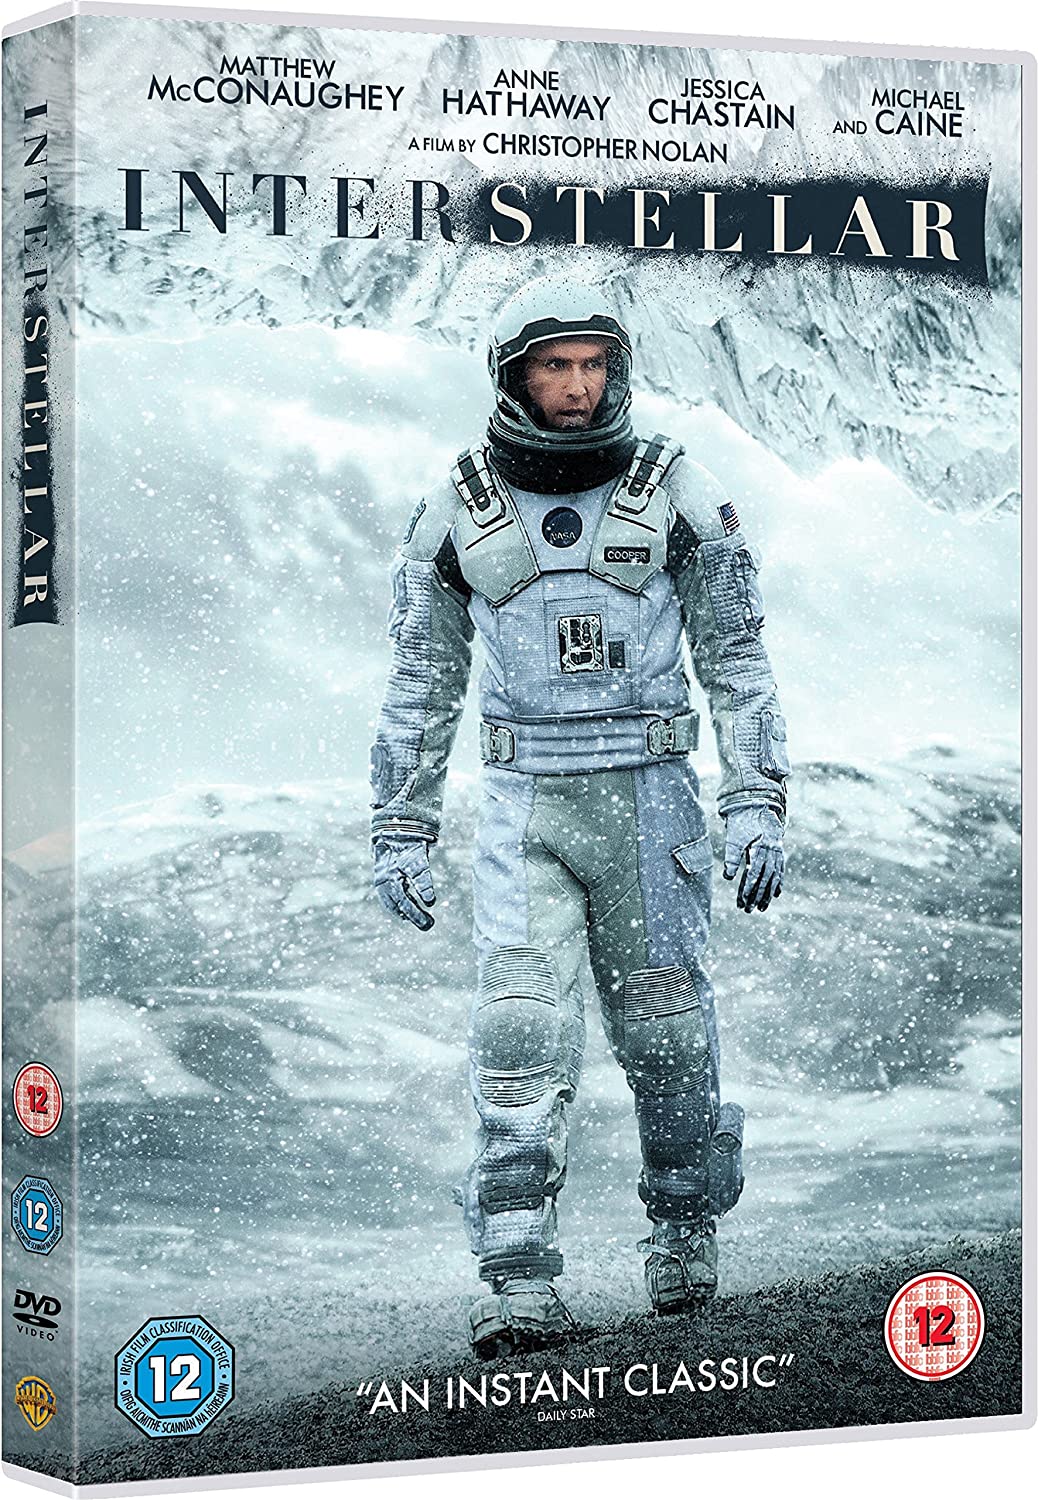 Interstellar - Sci-fi/Adventure [DVD]